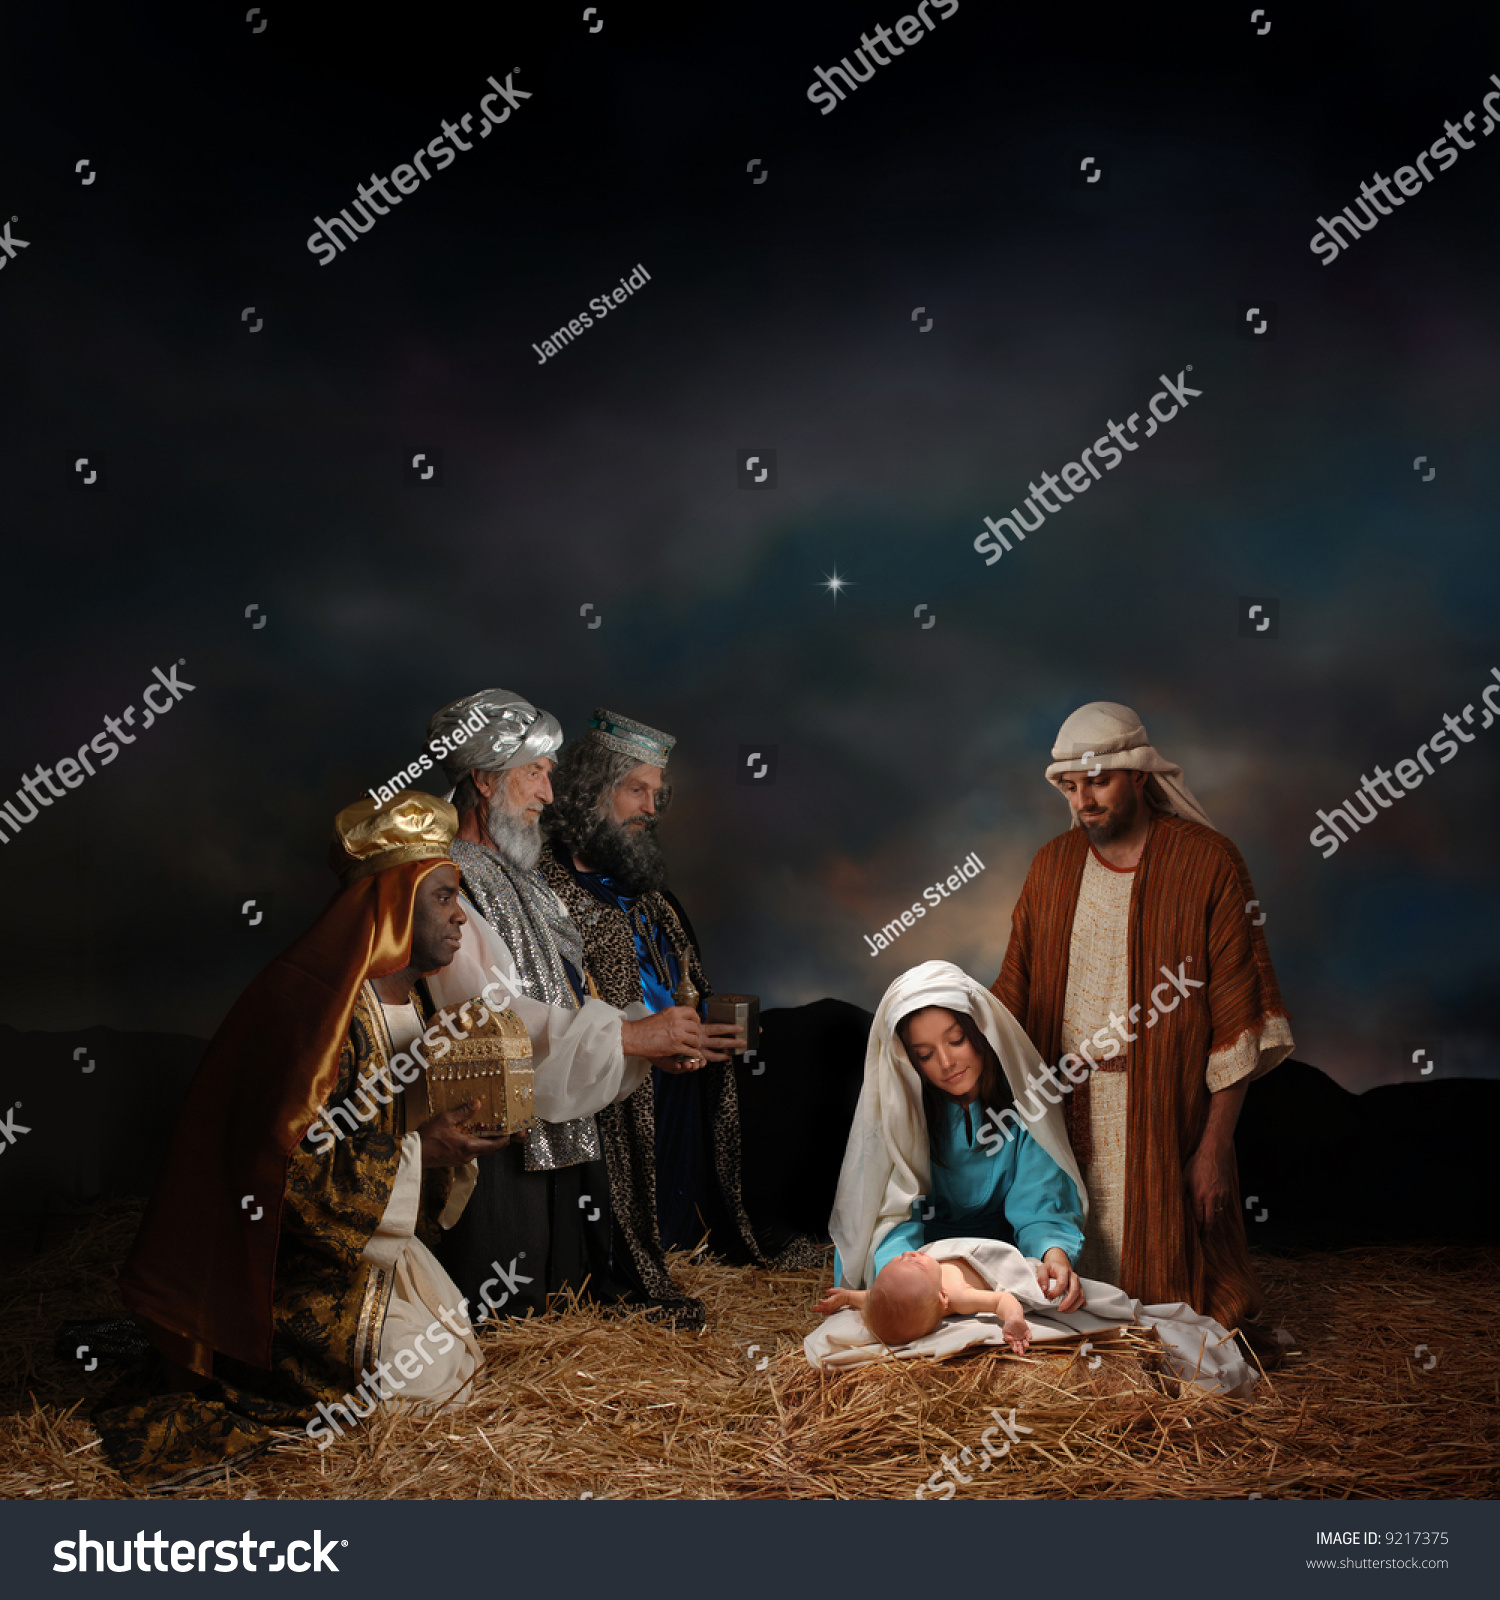 Christmas nativity scene with three Wise Men presenting ts to baby Jesus Mary & Joseph